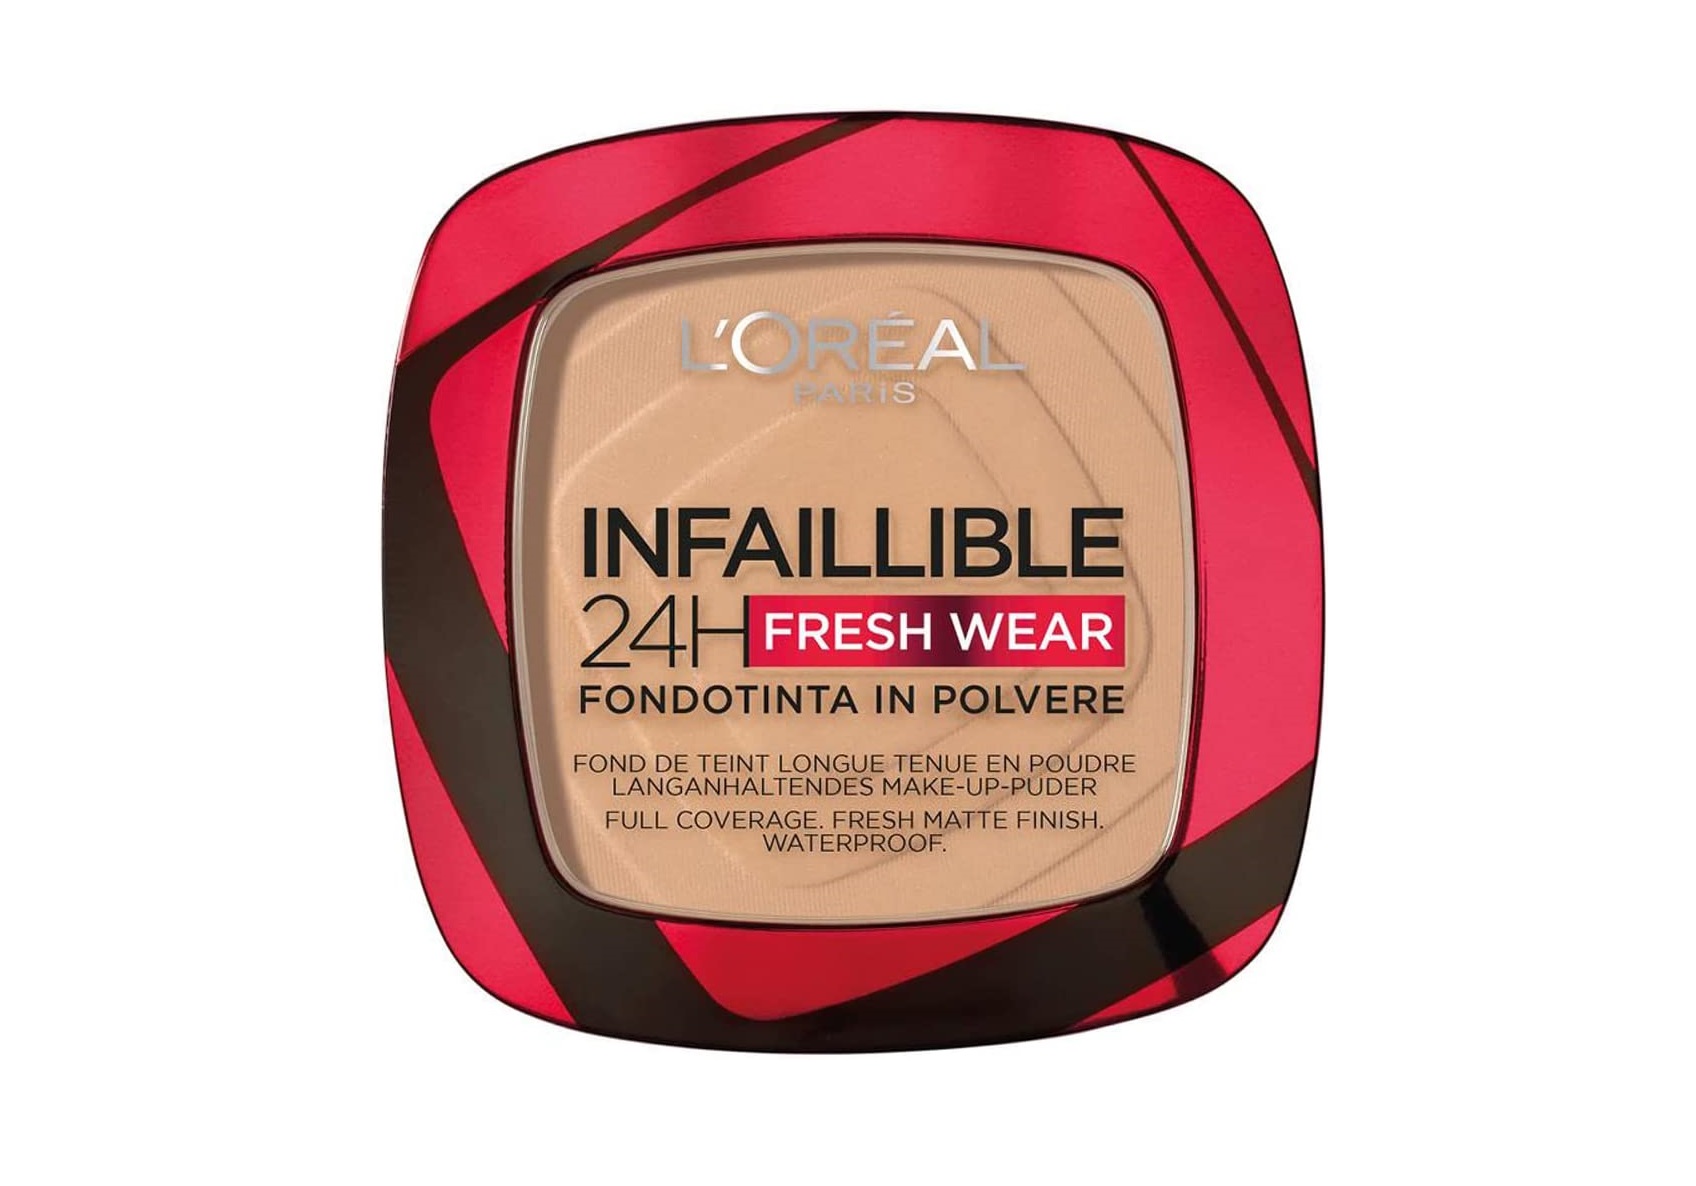 Infaillible compact powder foundation by L'Oreal Paris.